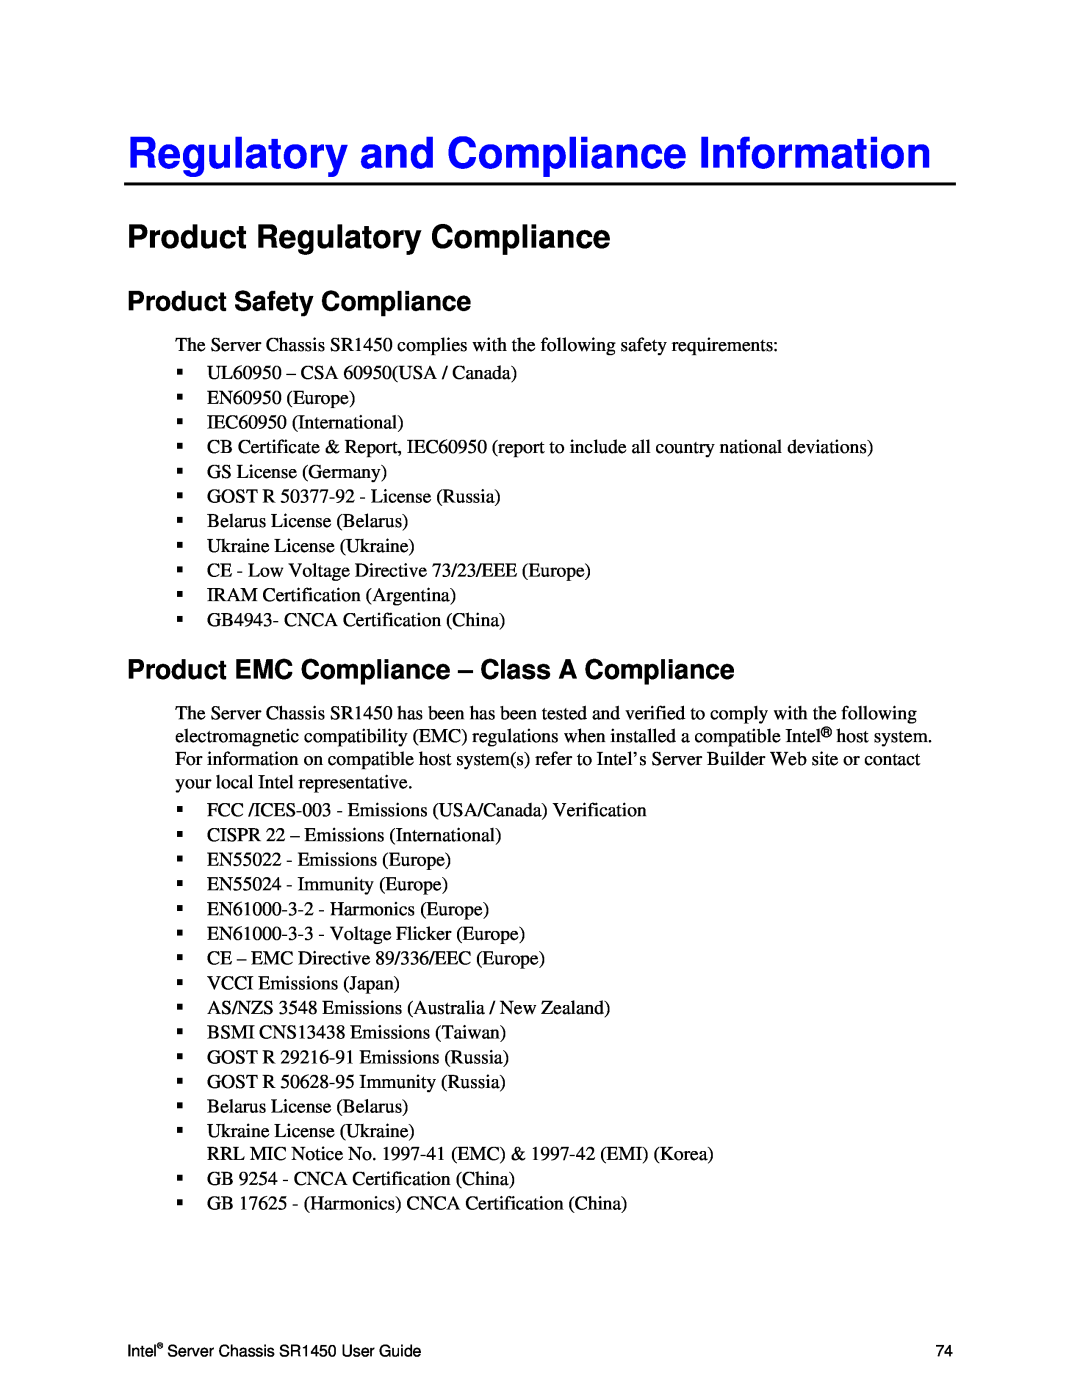 Intel SR1450 manual Regulatory and Compliance Information, Product Regulatory Compliance, Product Safety Compliance 